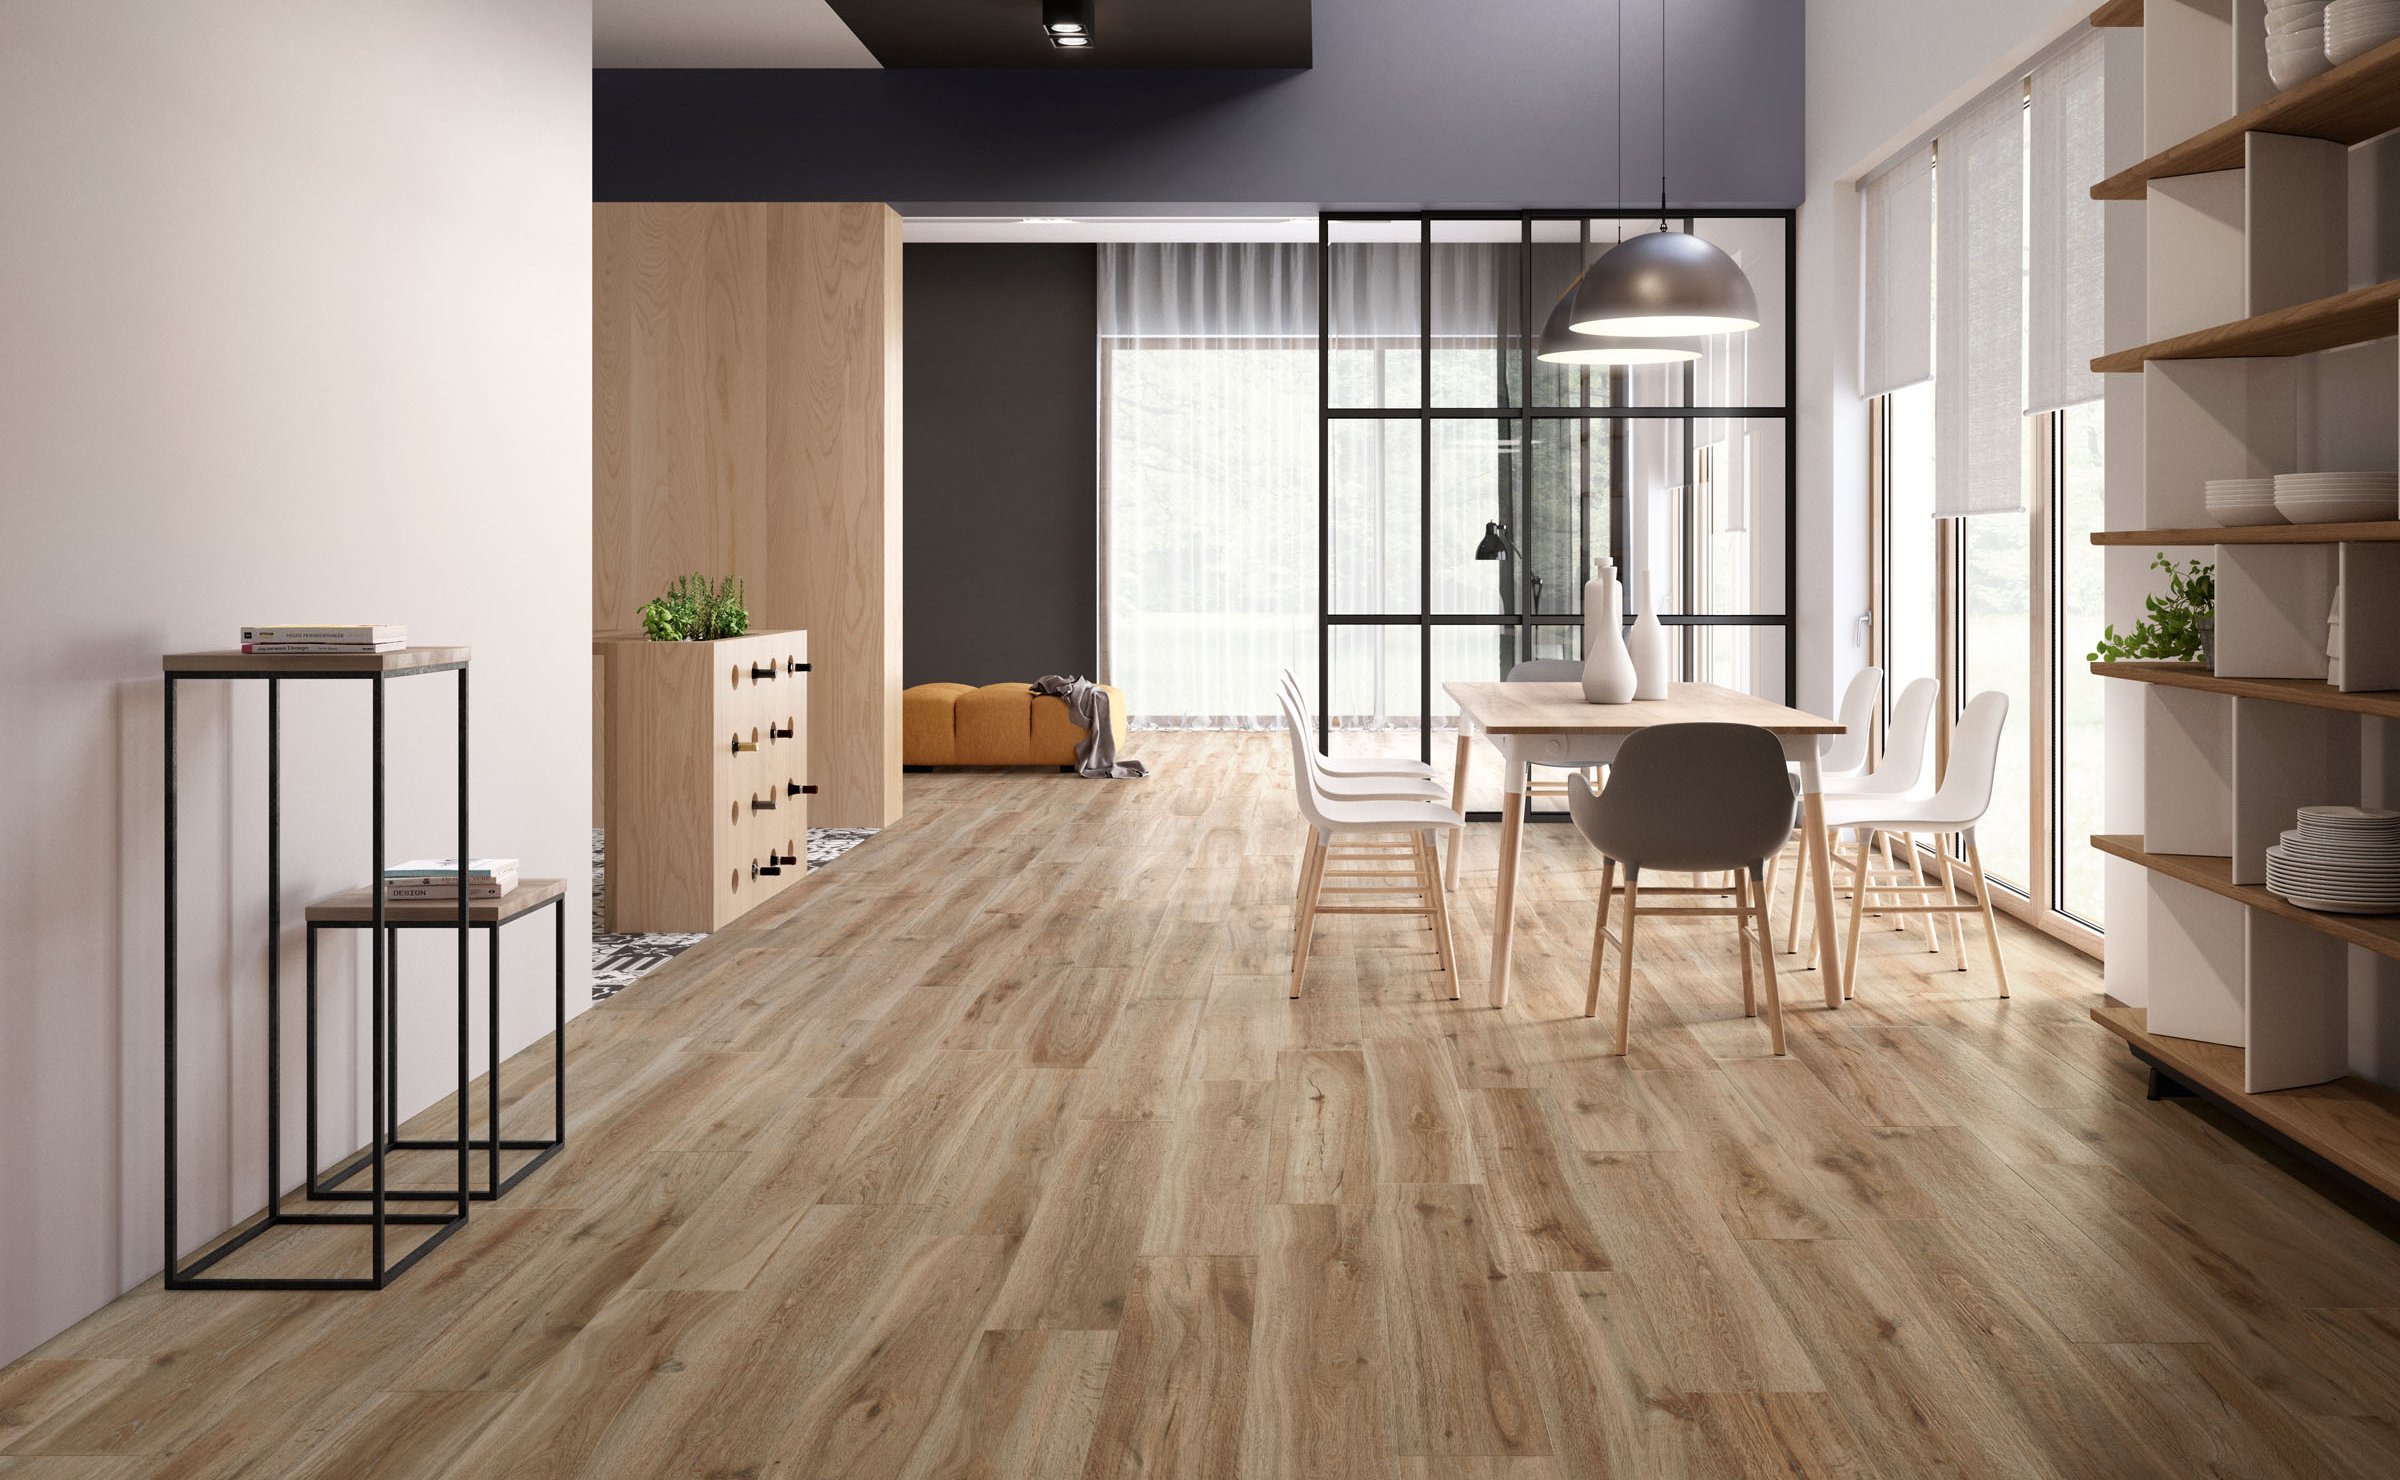 Barkwood: wood effect stoneware flooring